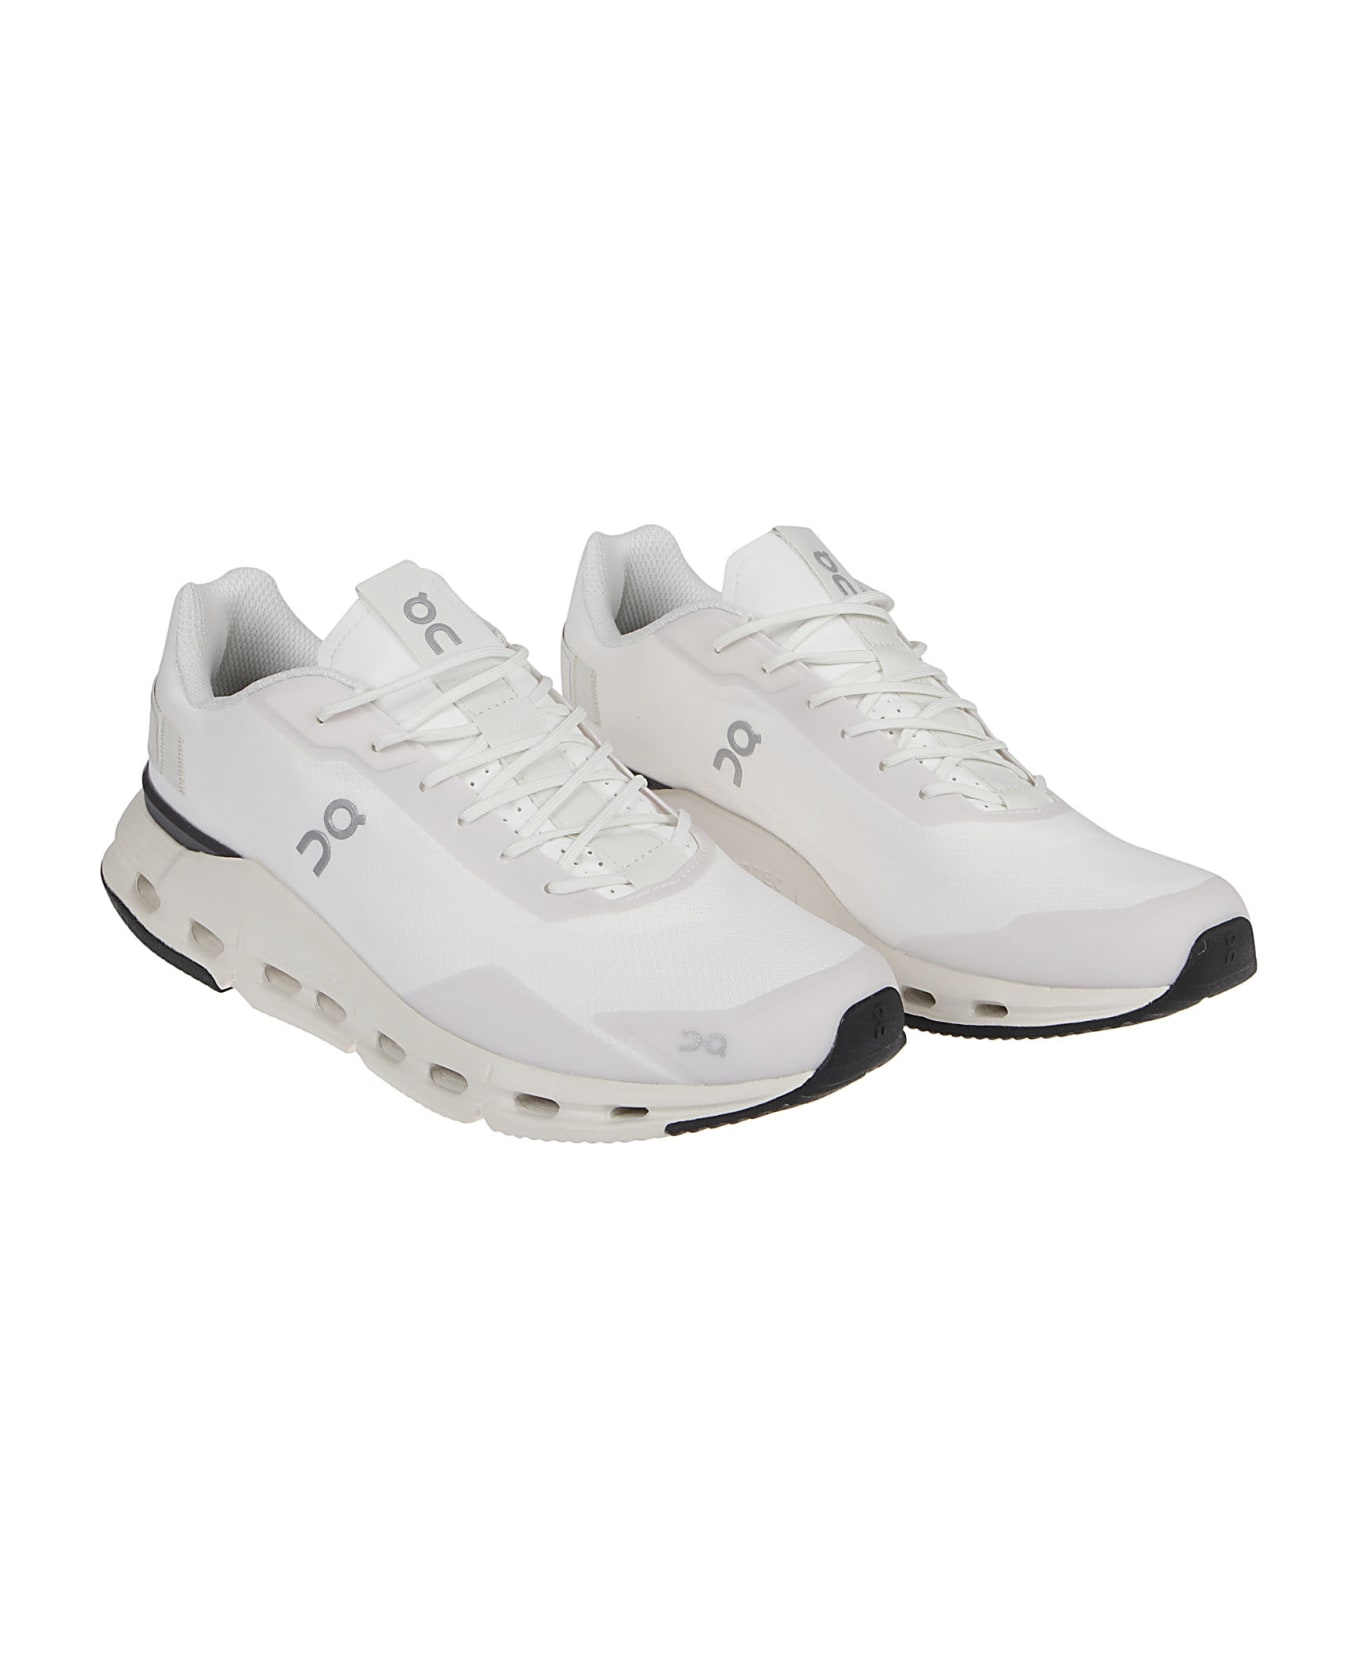 ON Cloudnova Form Sneakers - White